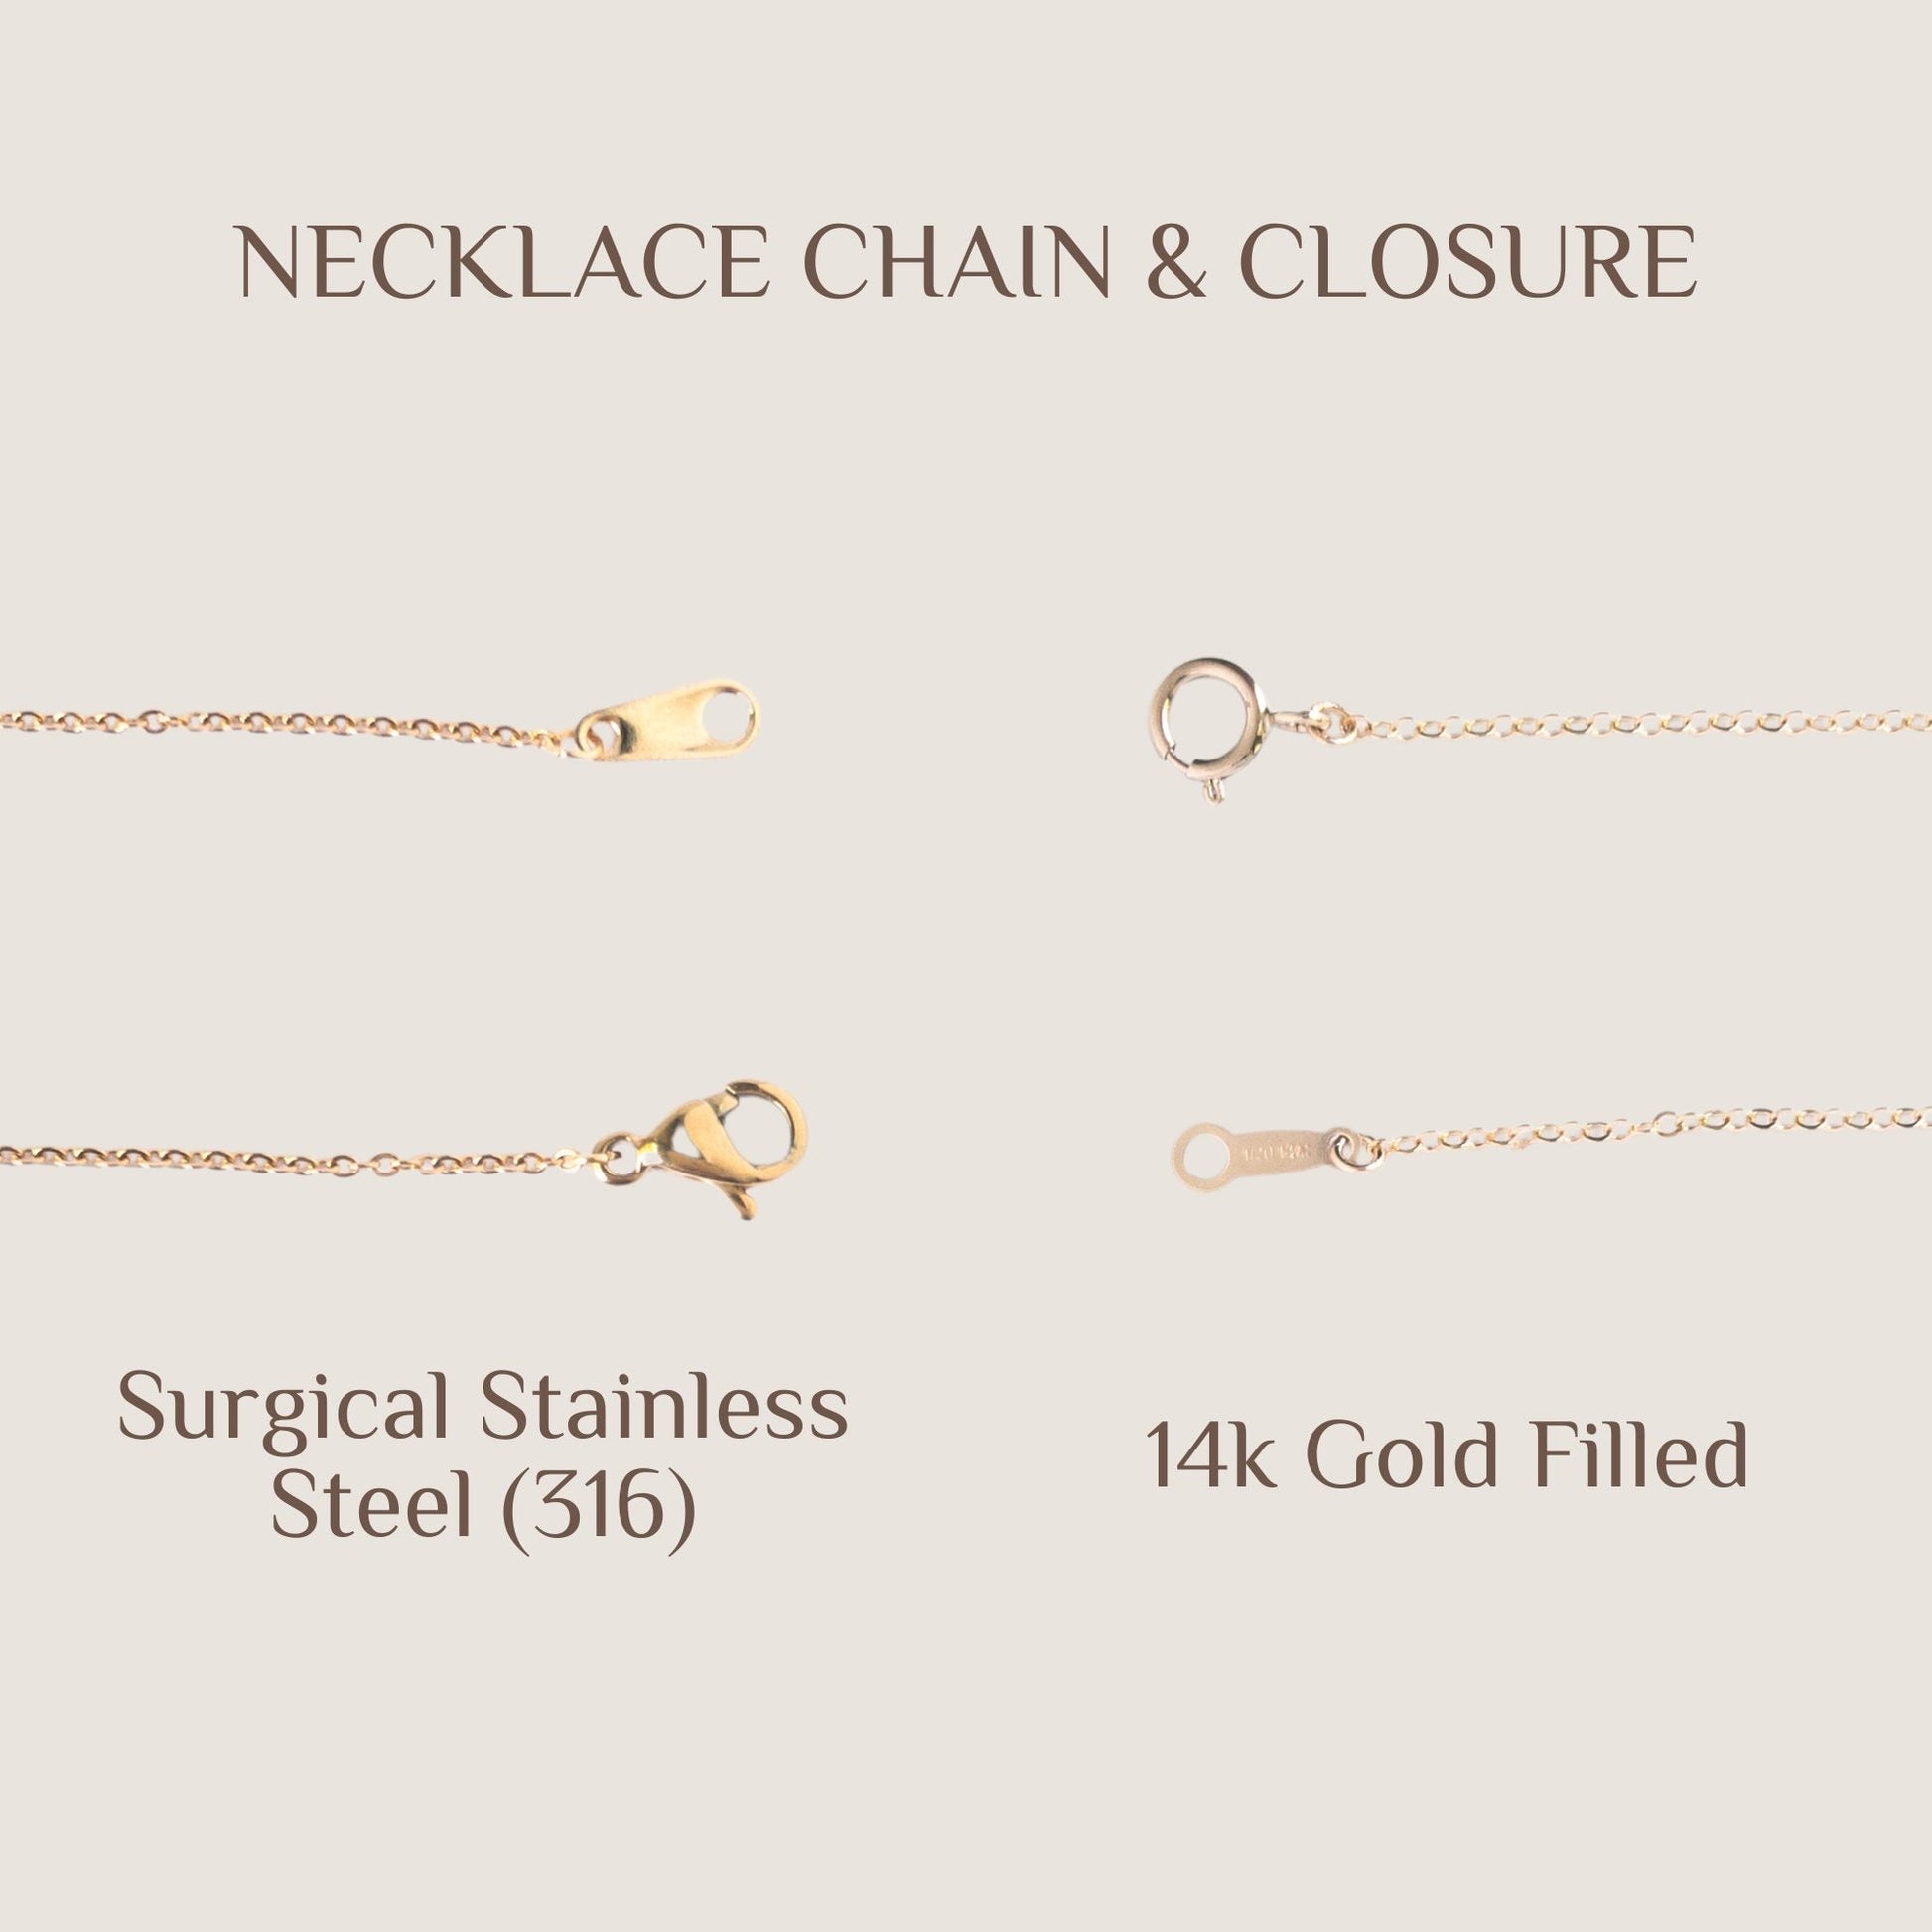 Kintsugi necklace chain and closure